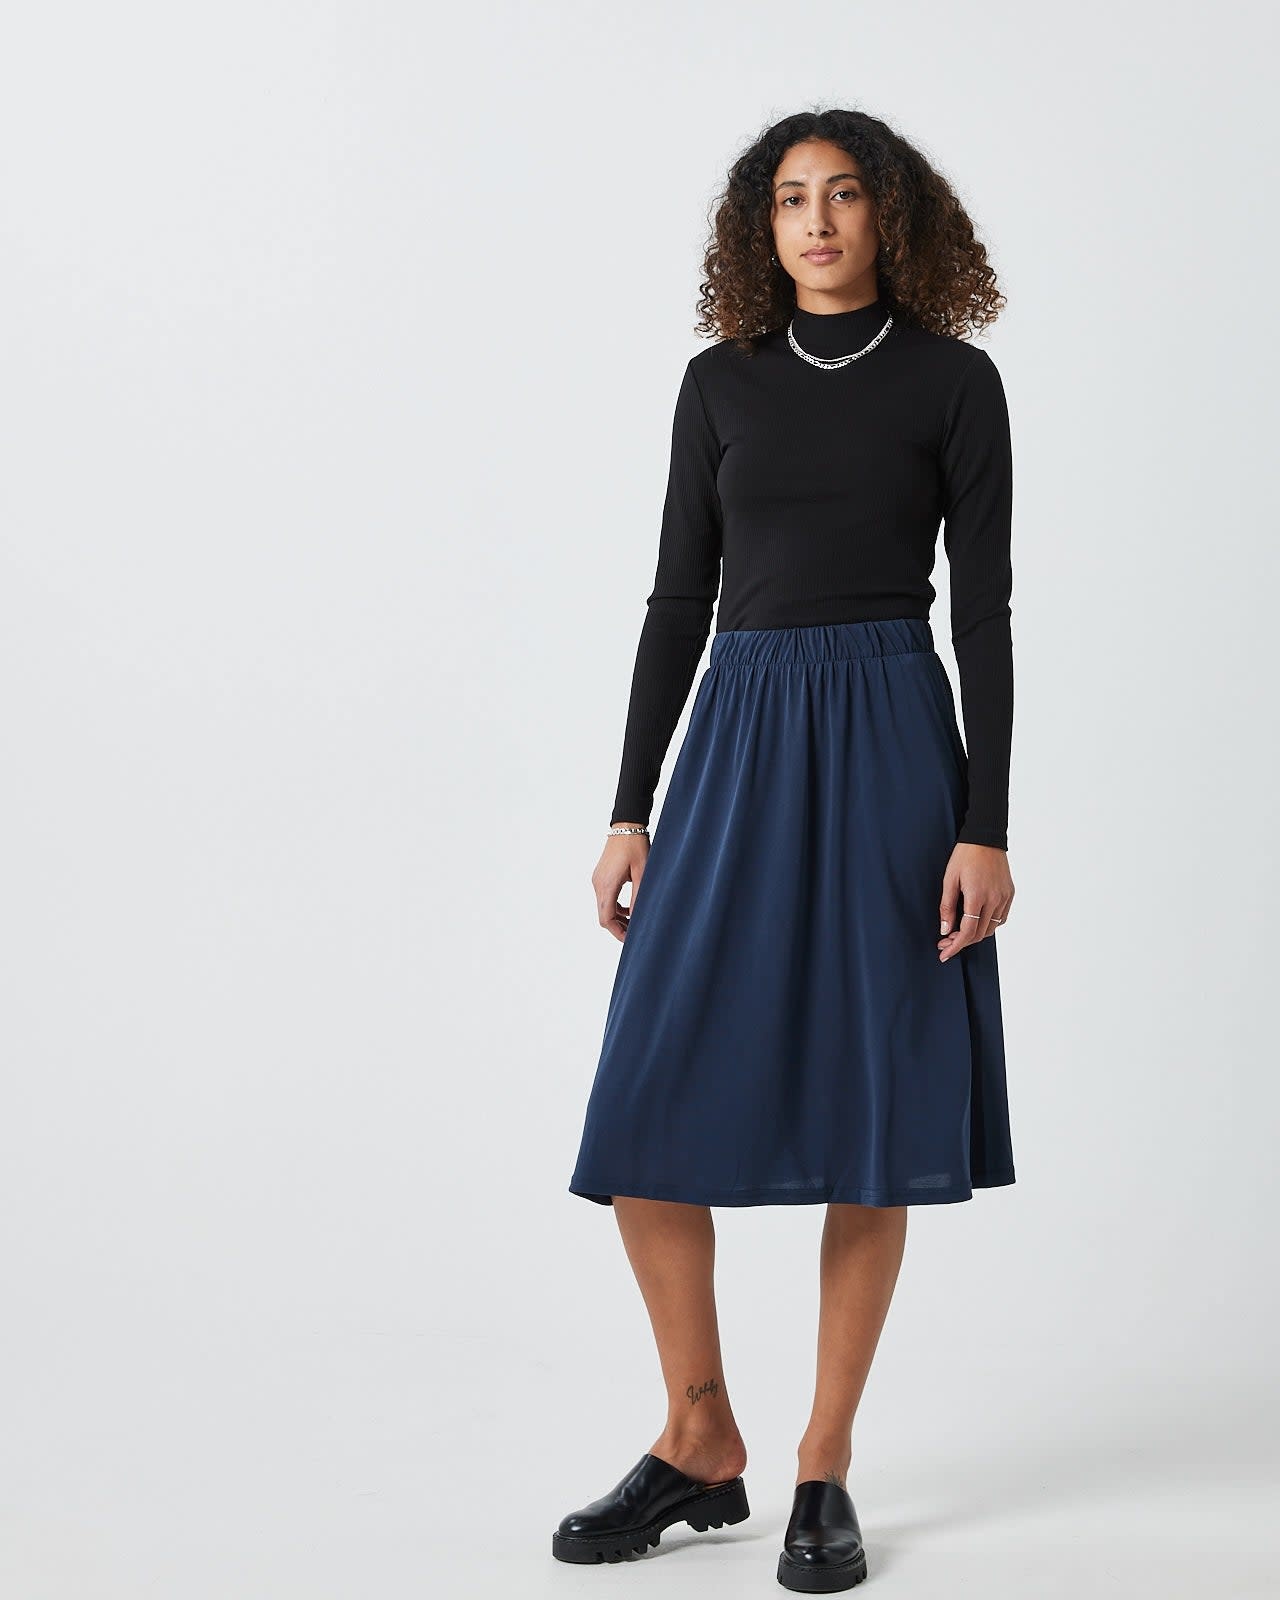 Minimum Minimum, Regisse Skirt, navy blazer, XS